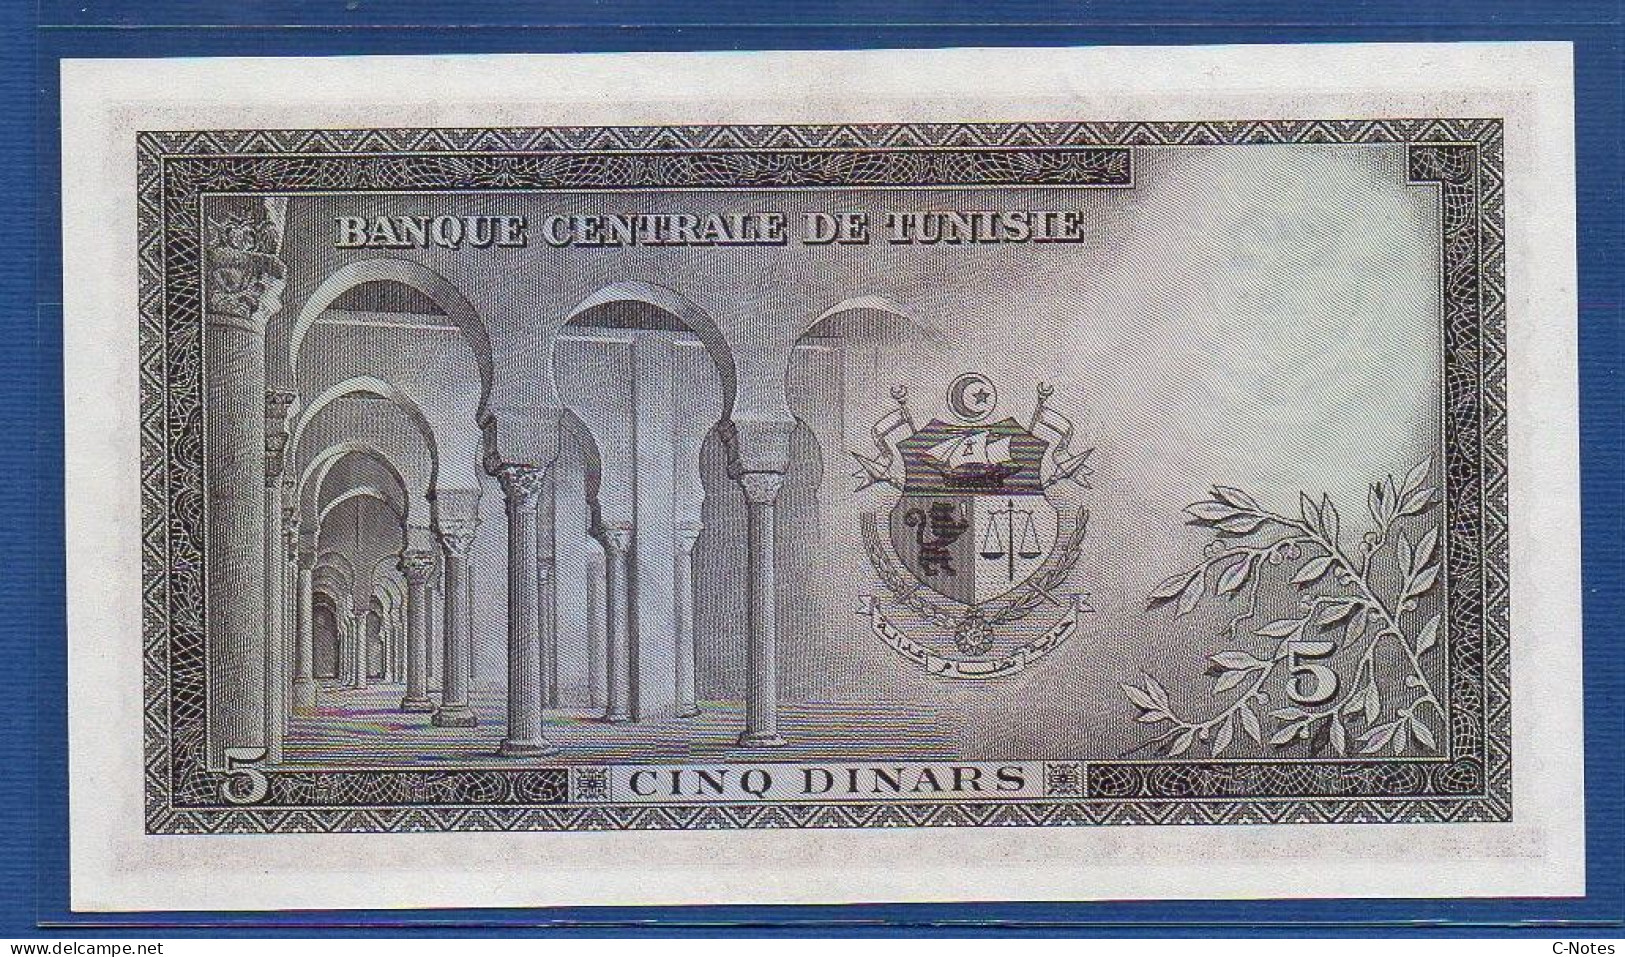 TUNISIA - P.59 – 5 Dinars ND (1958) XF/aUNC, S/n C/1 171795 - Tunisia